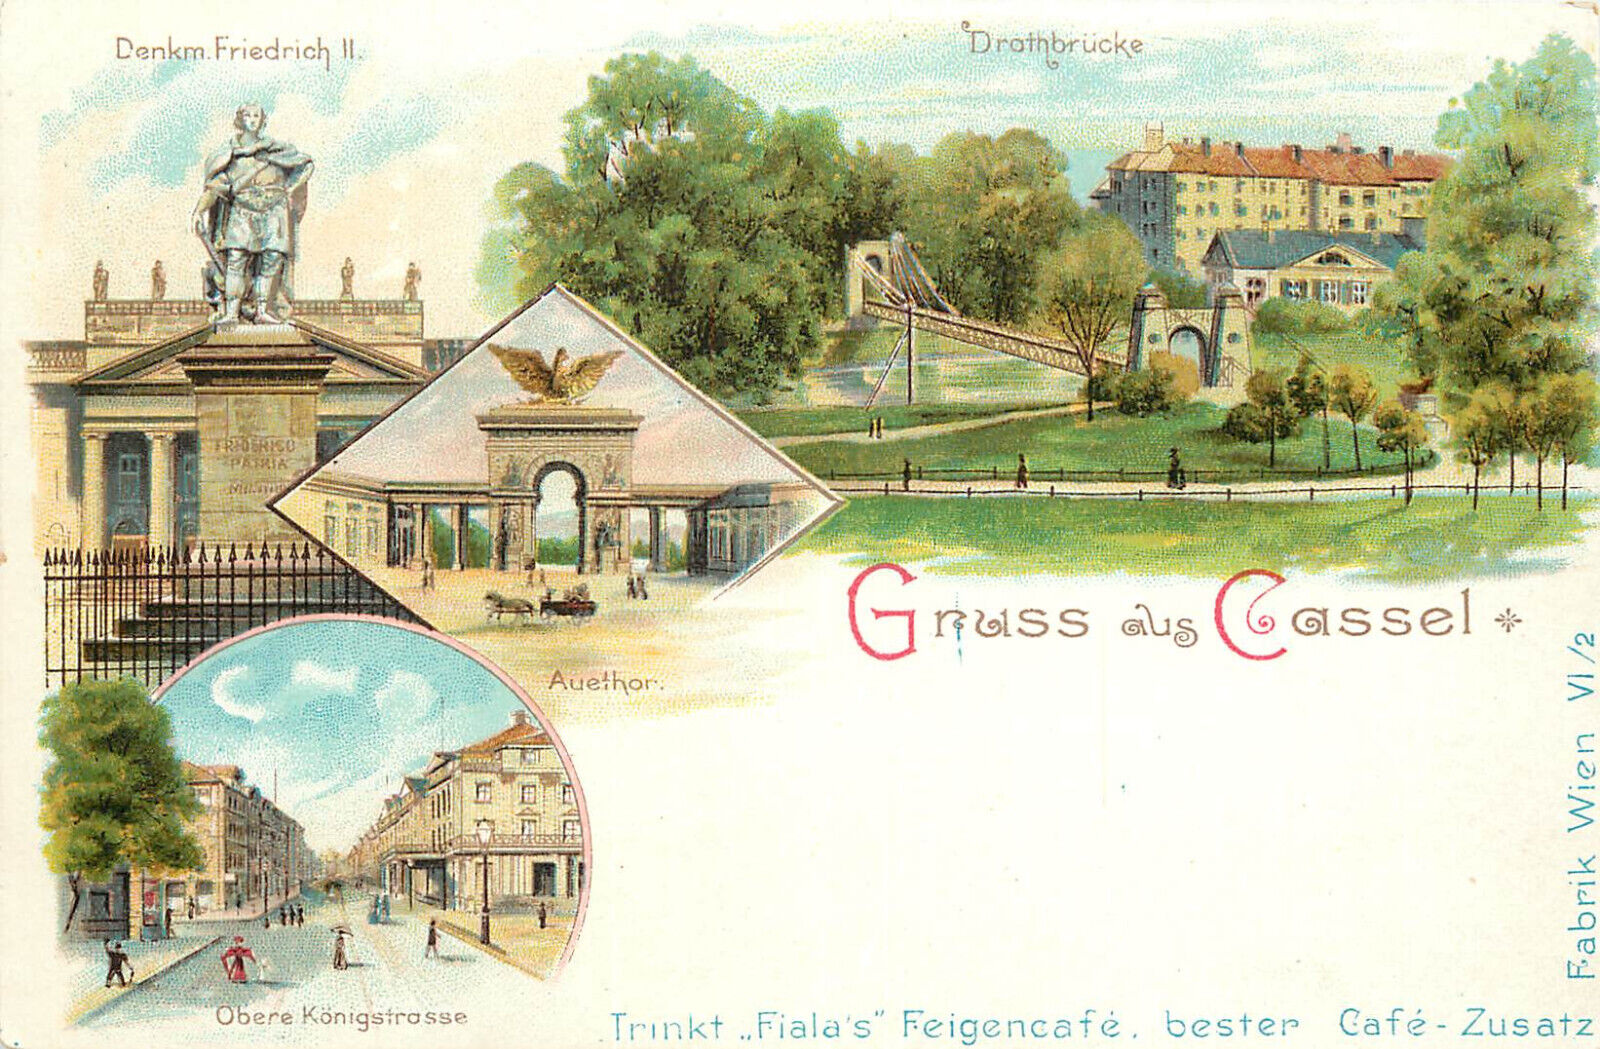 Postcard Trink Fialas Feigencafe Cafe zusatz Gruss Aus Cassel Drothbrucke Kassel